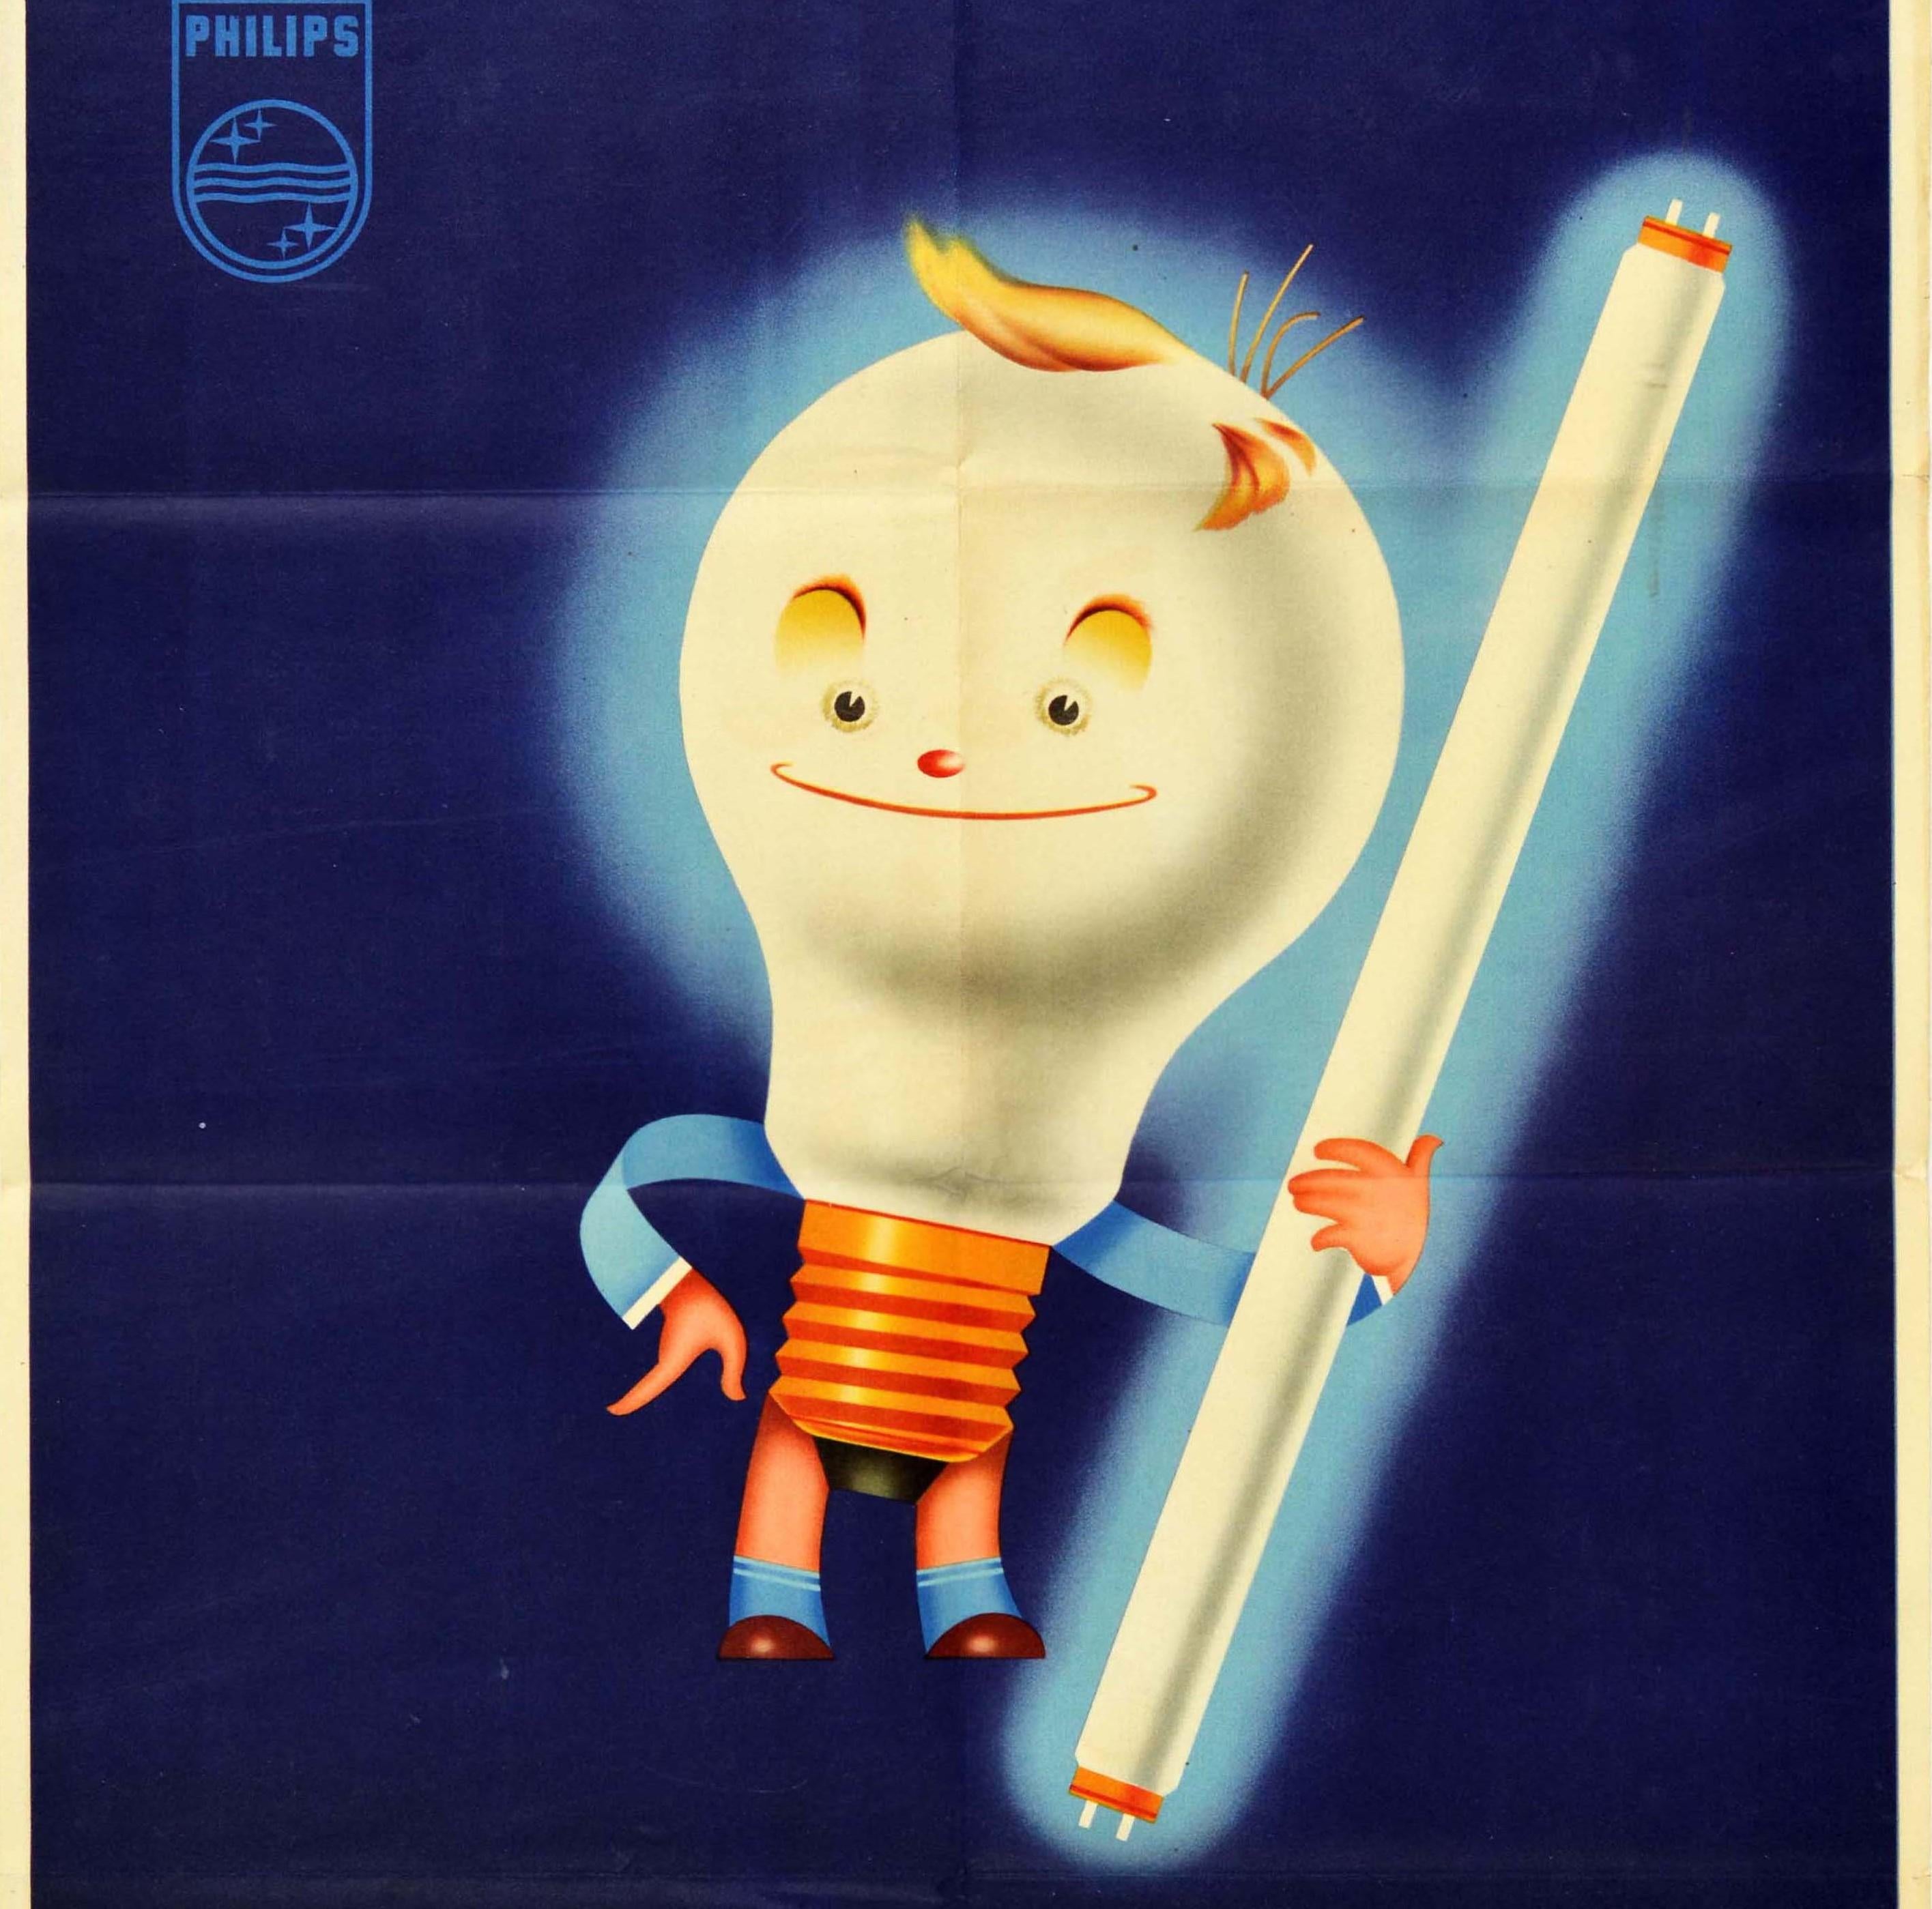 led bulb advertisement poster